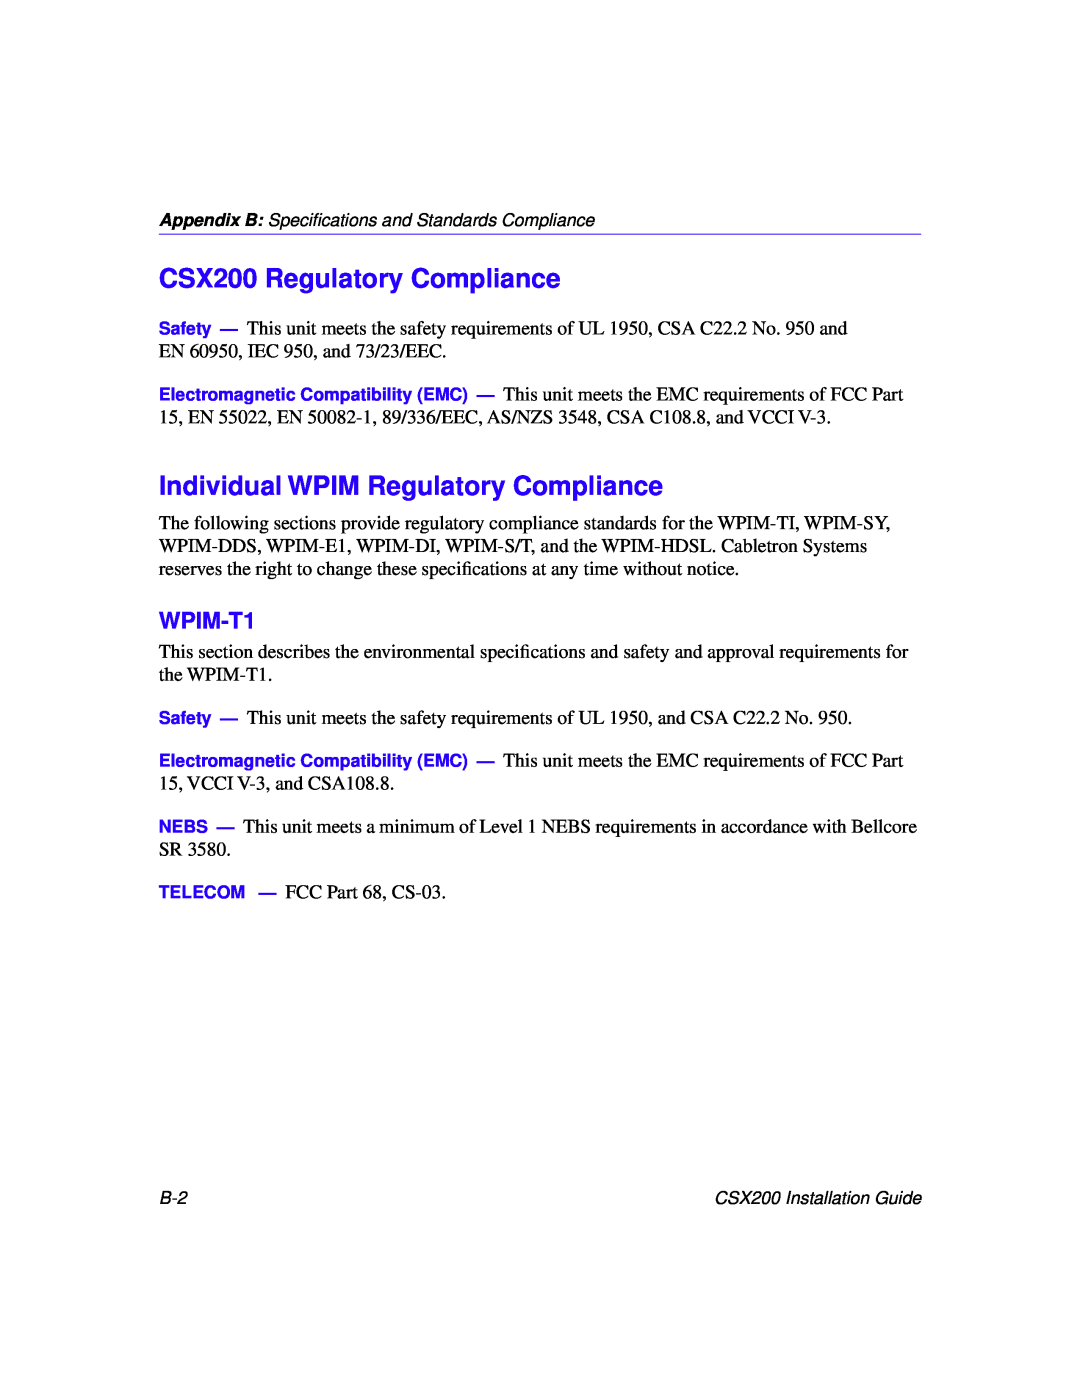 Cabletron Systems manual CSX200 Regulatory Compliance, Individual WPIM Regulatory Compliance, WPIM-T1 